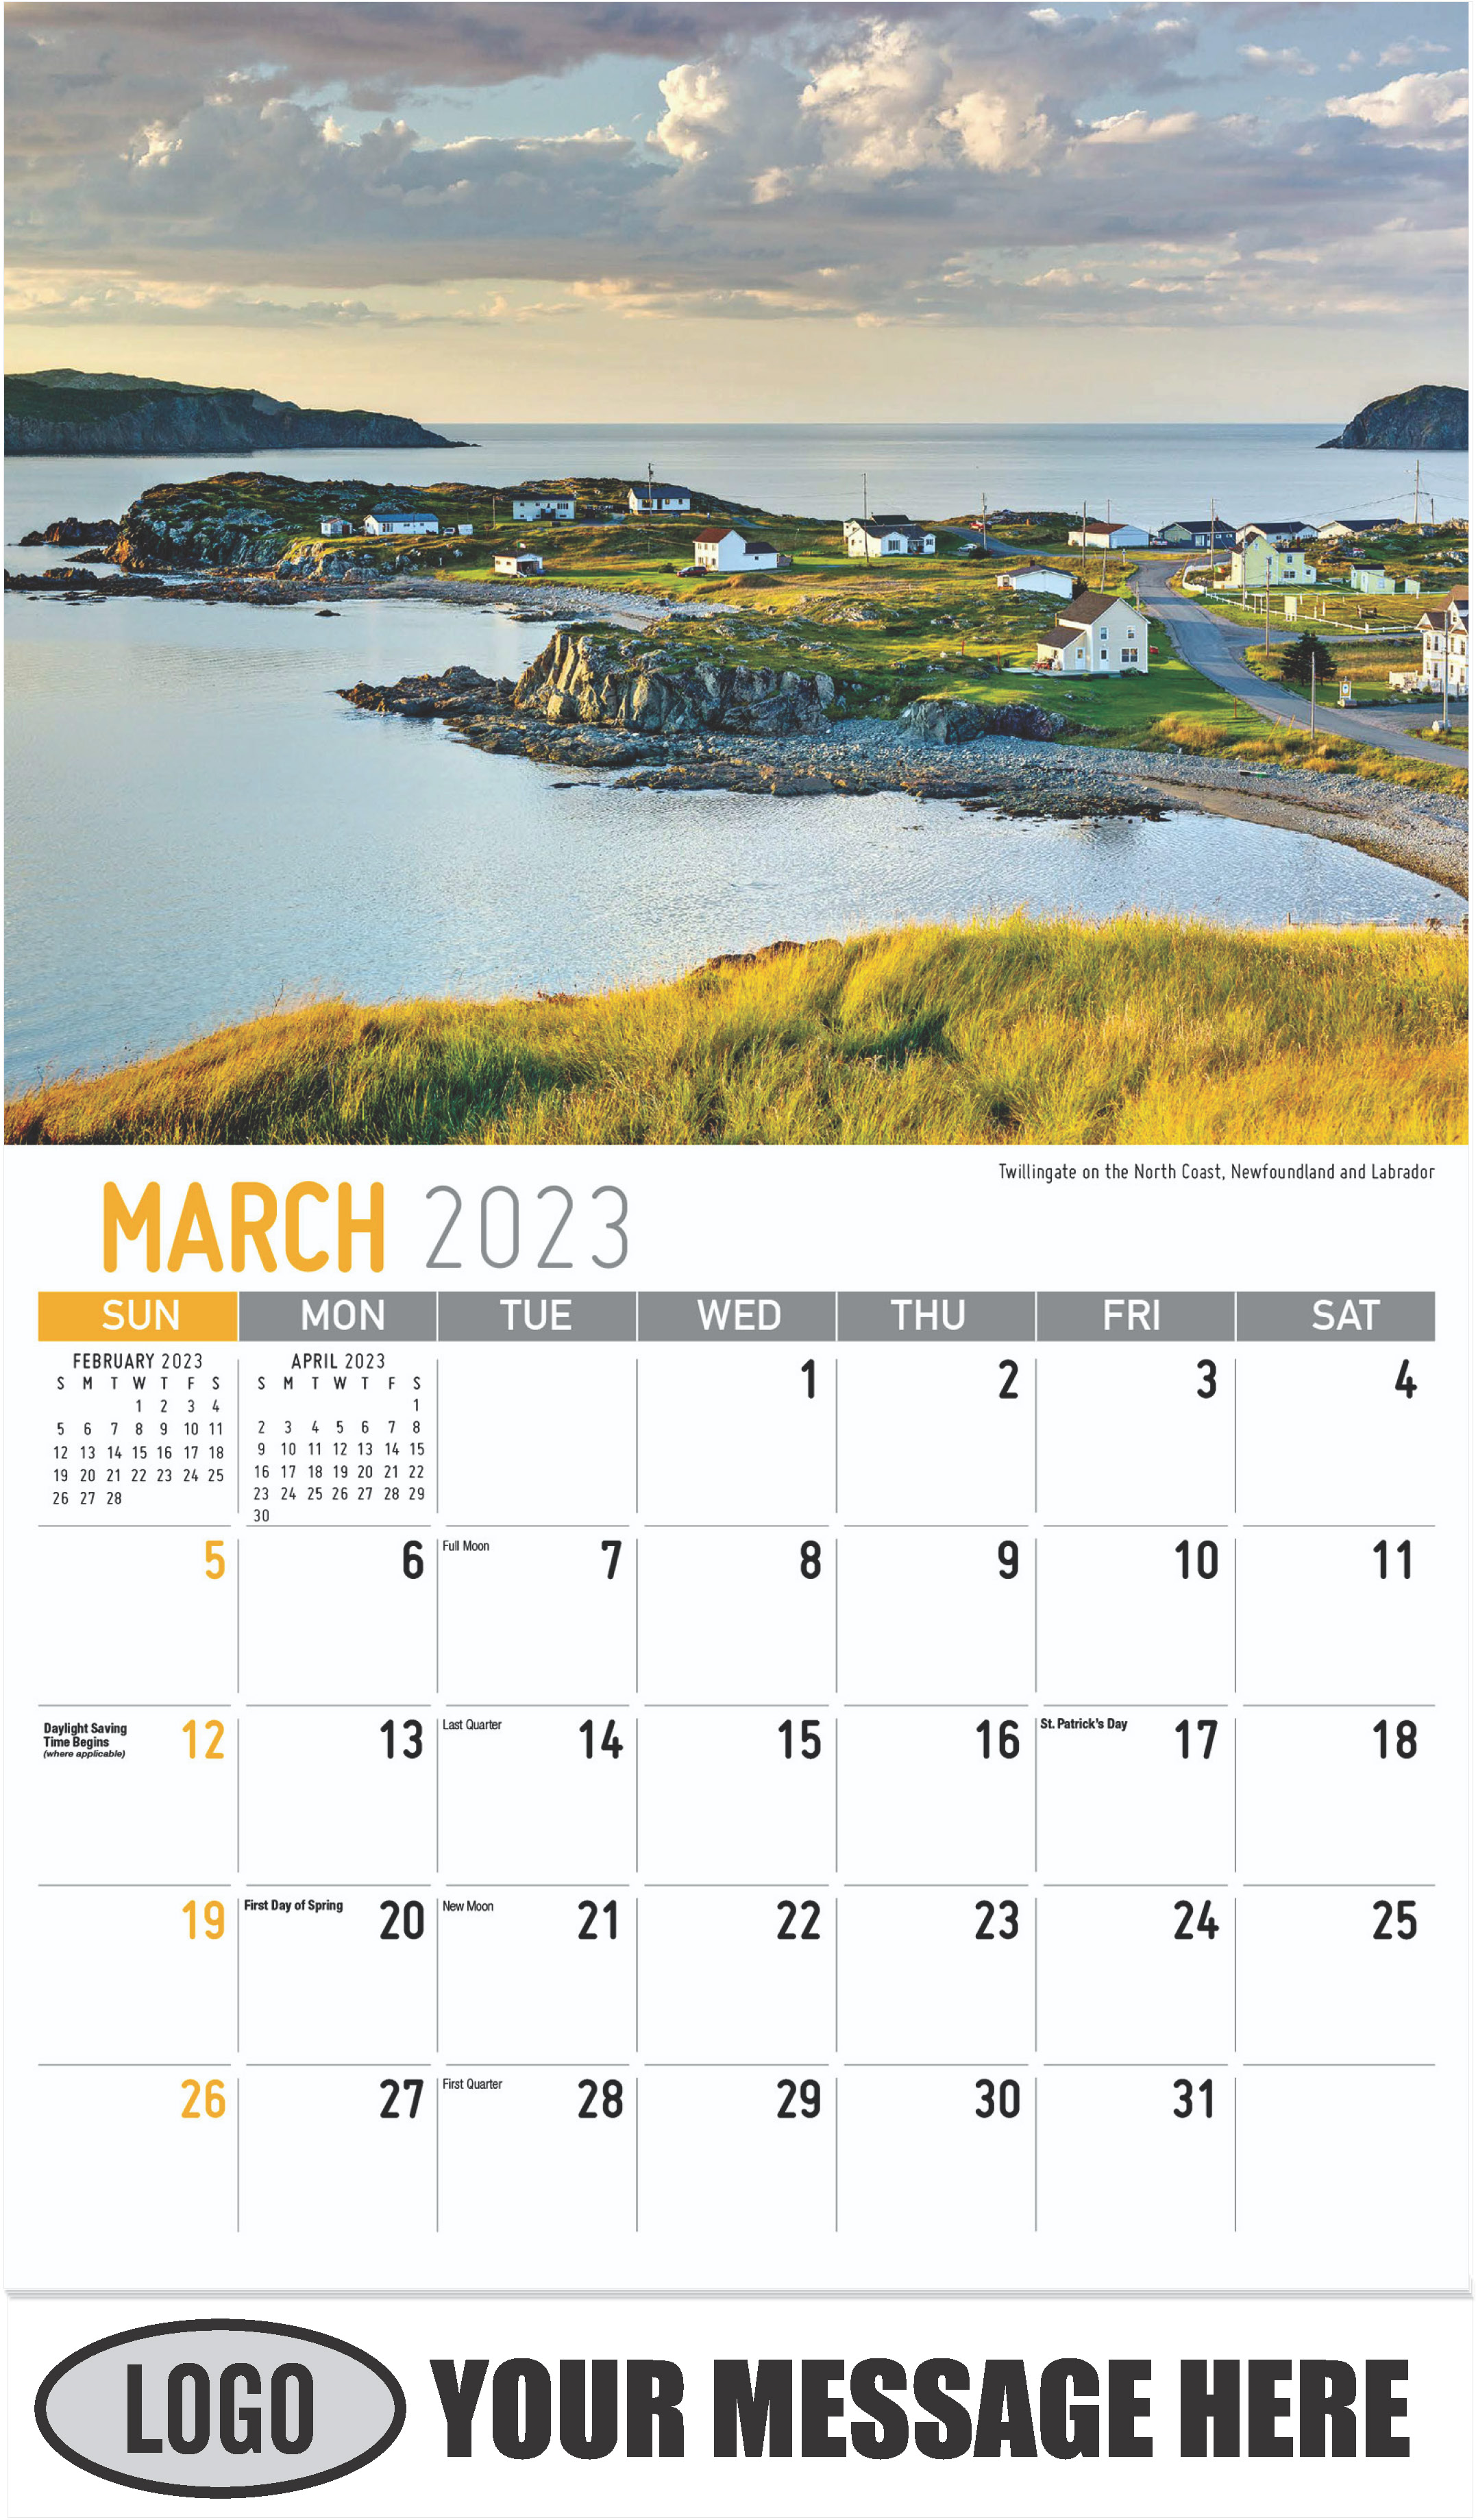 Twillingate on the North Coast, Newfoundland - March - Atlantic Canada 2023 Promotional Calendar